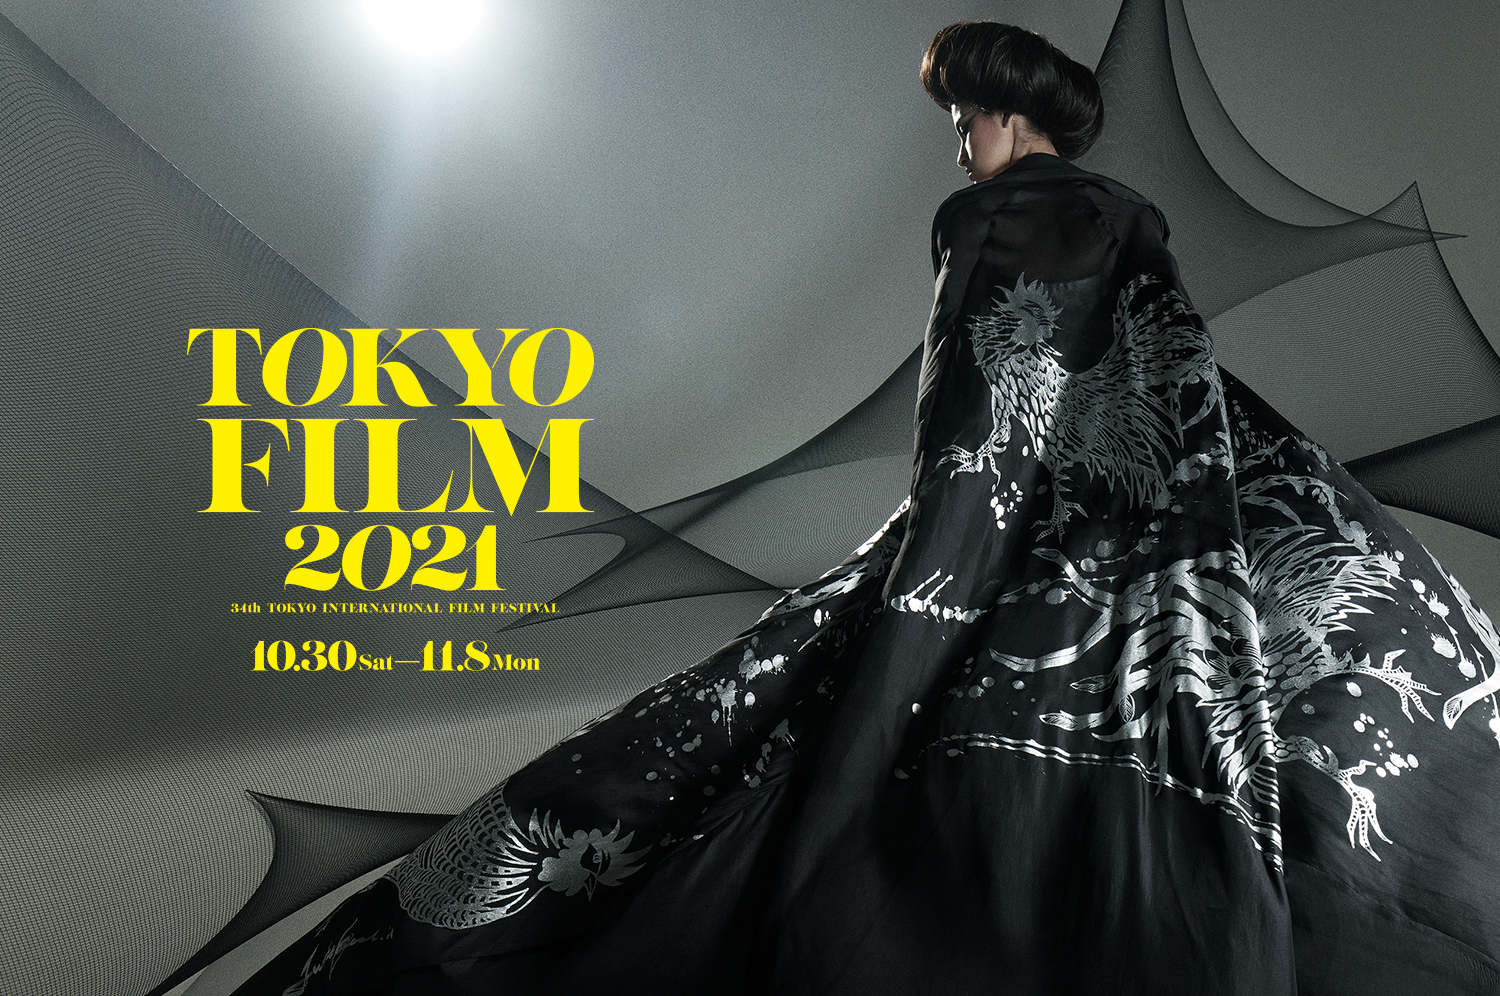 TOKYO FILM 2021 34th Tokyo International Film Festival - Acclaimed Designer Junko KOSHINO Creates 34th TIFF Visuals